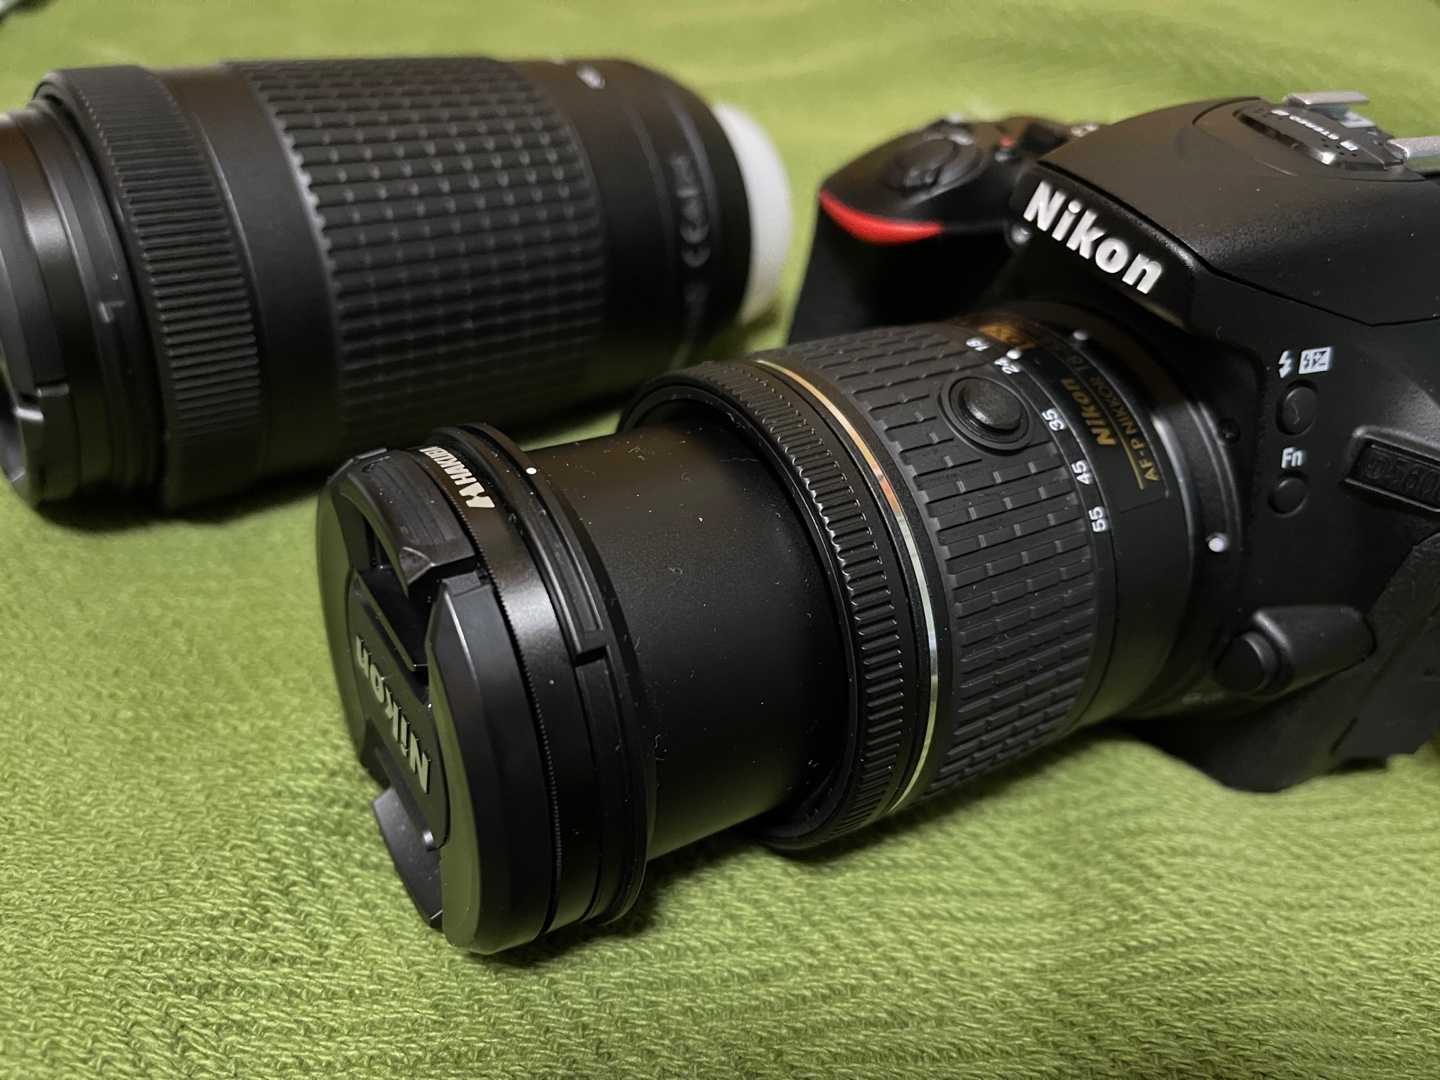 Nikon D5600 ダブルズームキット レンズのみ - カメラ